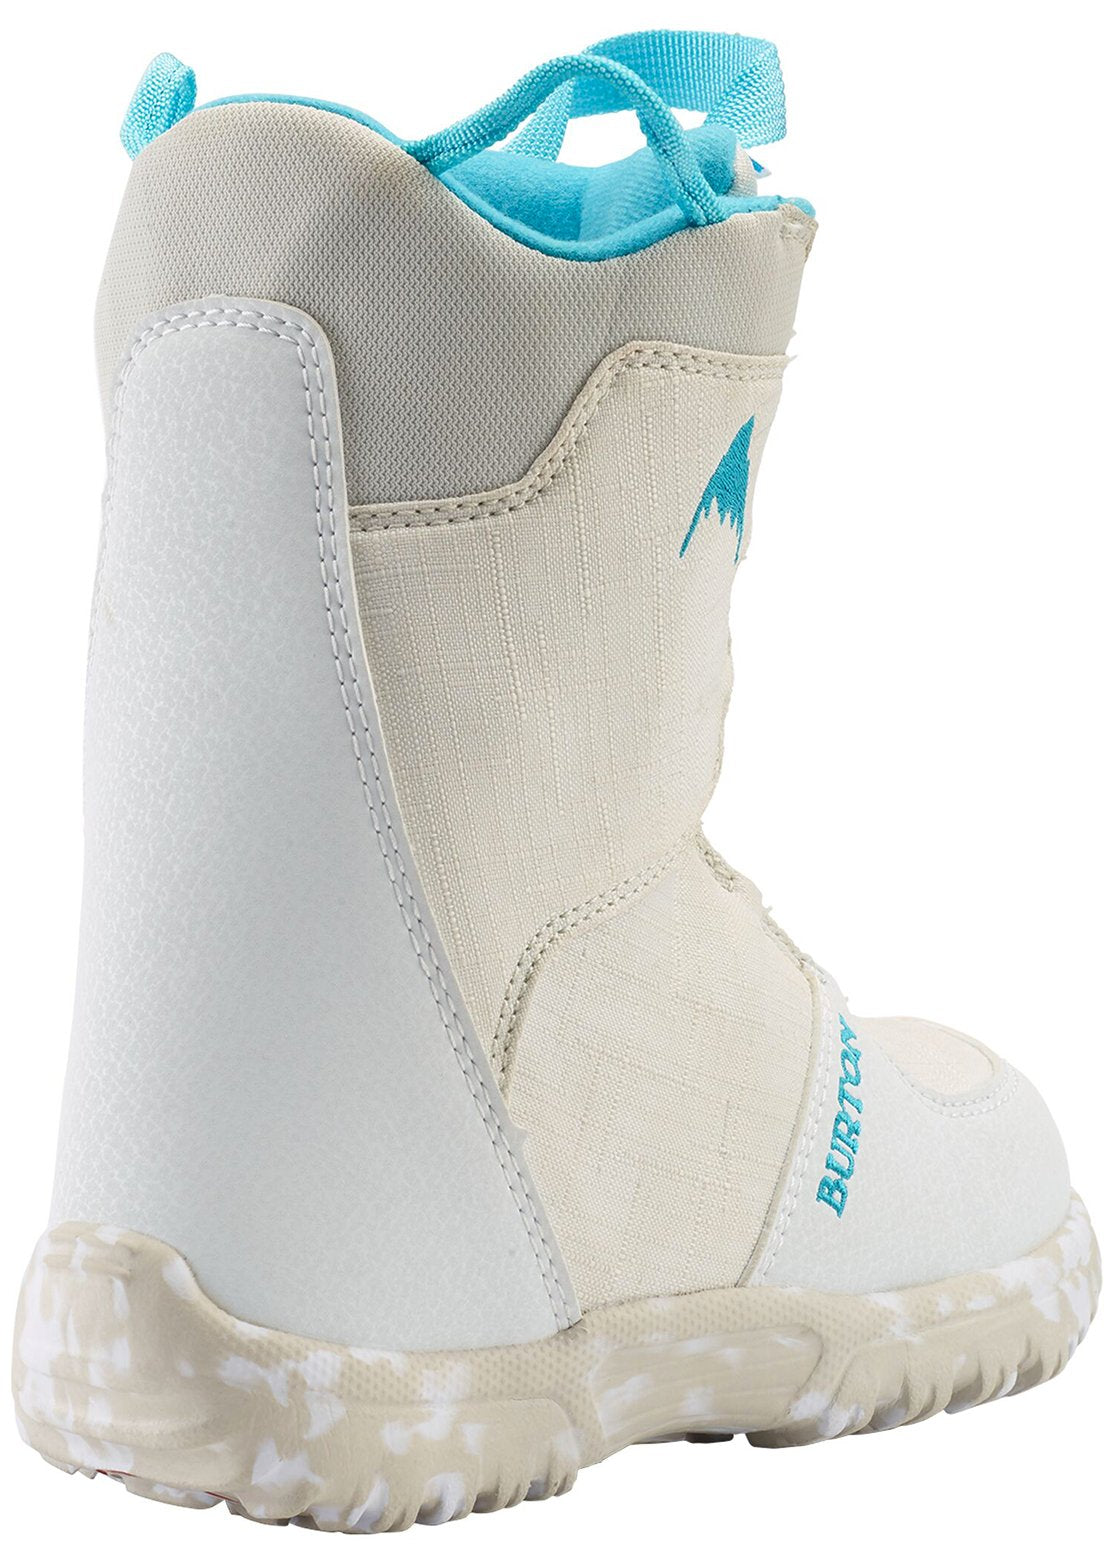 Burton Junior Grom Boa Snowboard Boots